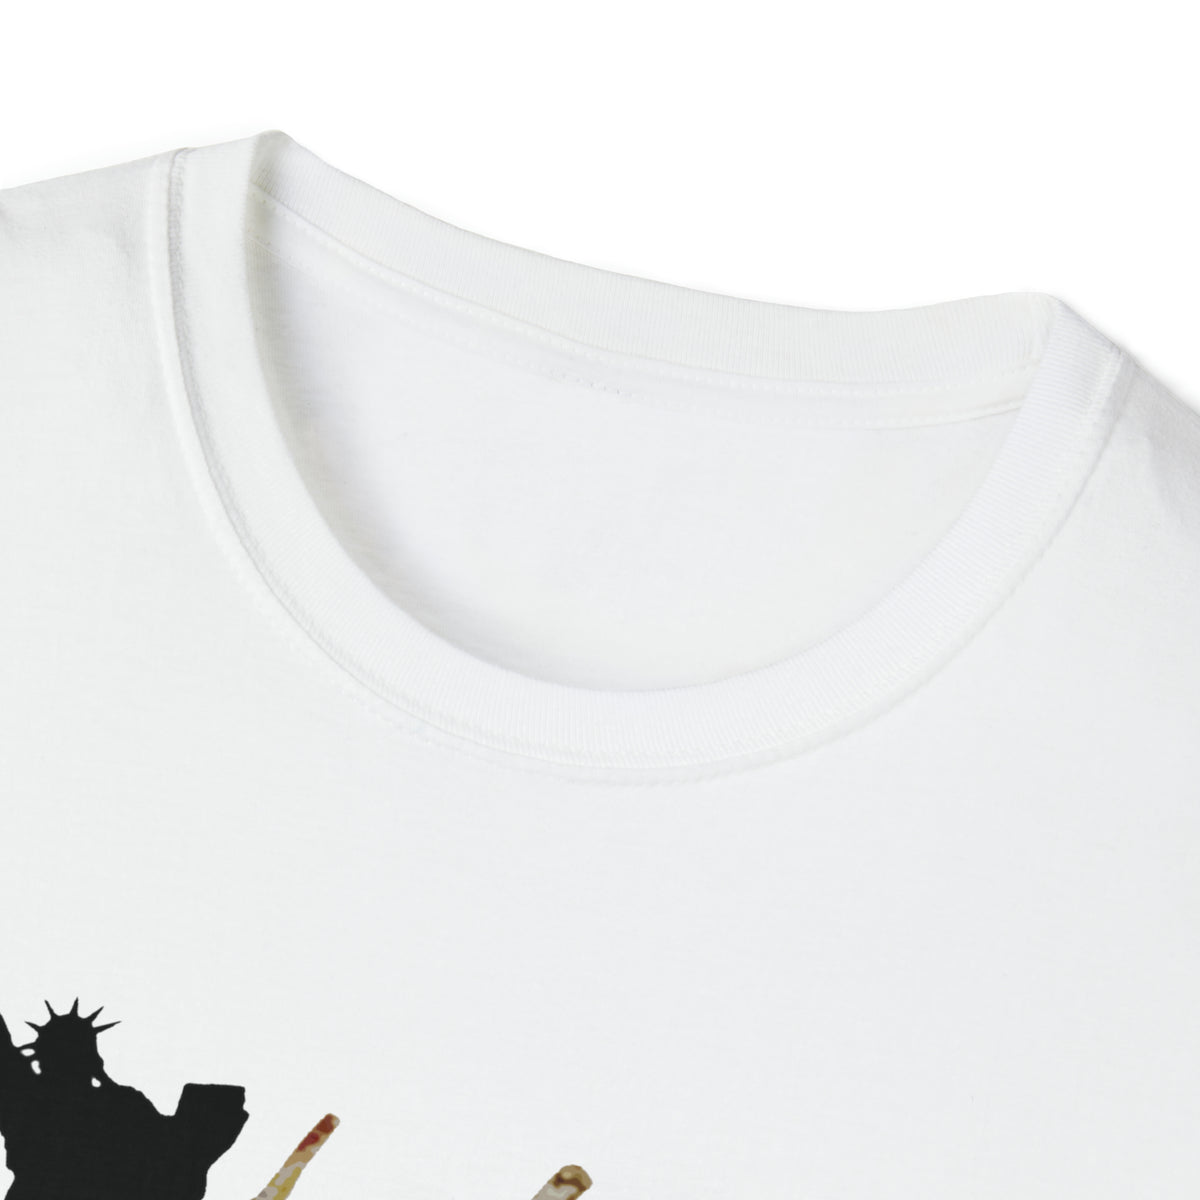 Biggie Smalls - It Was All A Dream -  Unisex Softstyle T Shirt, Fan Art T Shirt, Graphic Printed, Streetwear, Music, Pop Culture, Stylish, Classic.